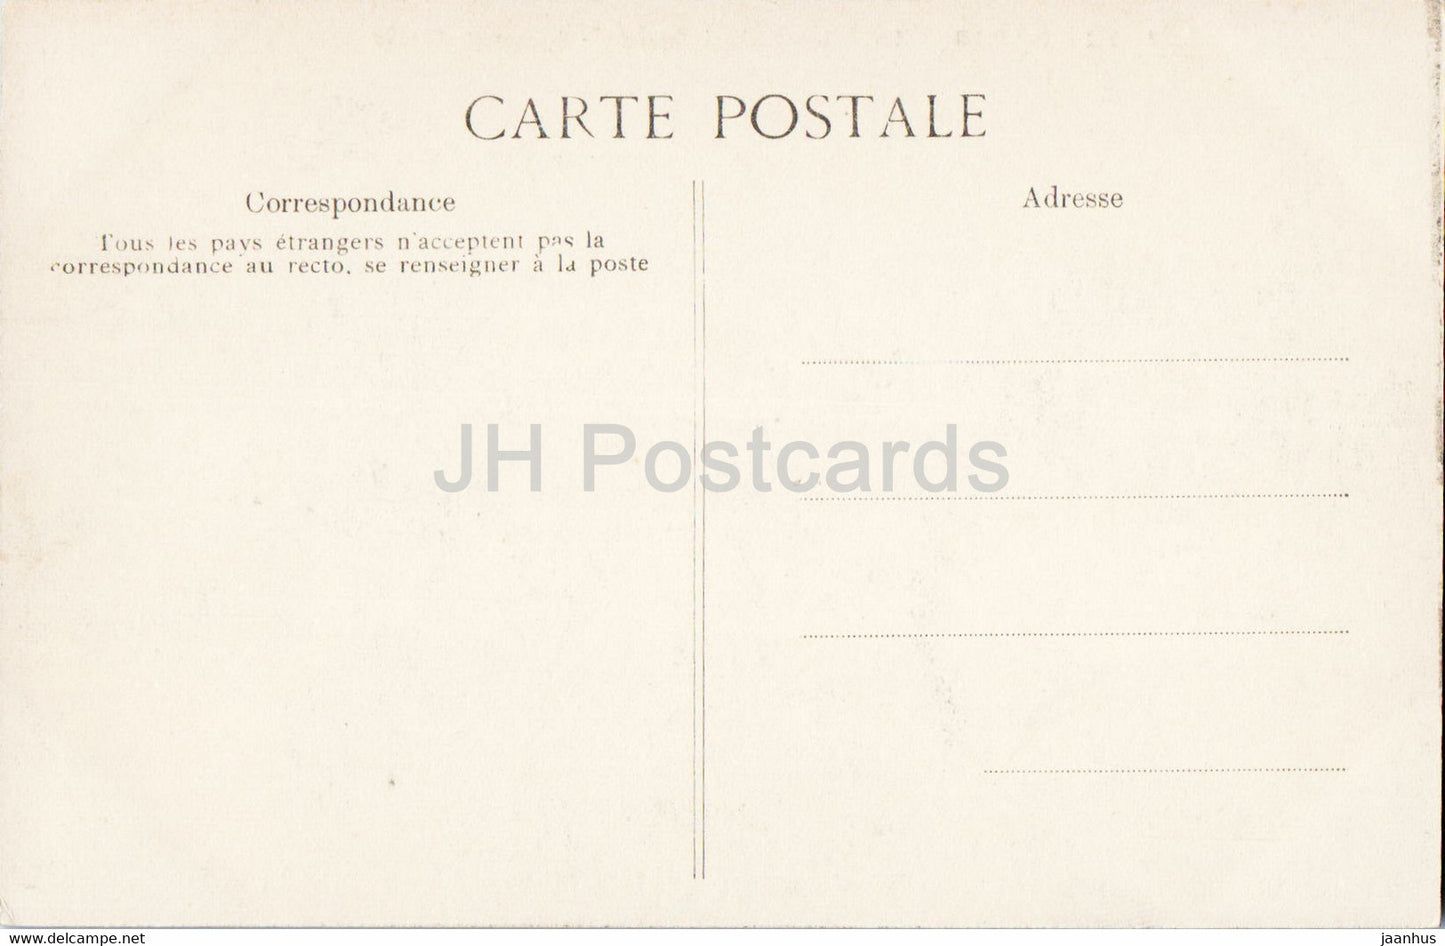 Paris - Interieur de l'Opera - Grande Salle - opera theatre - 4272 - old postcard - France - unused